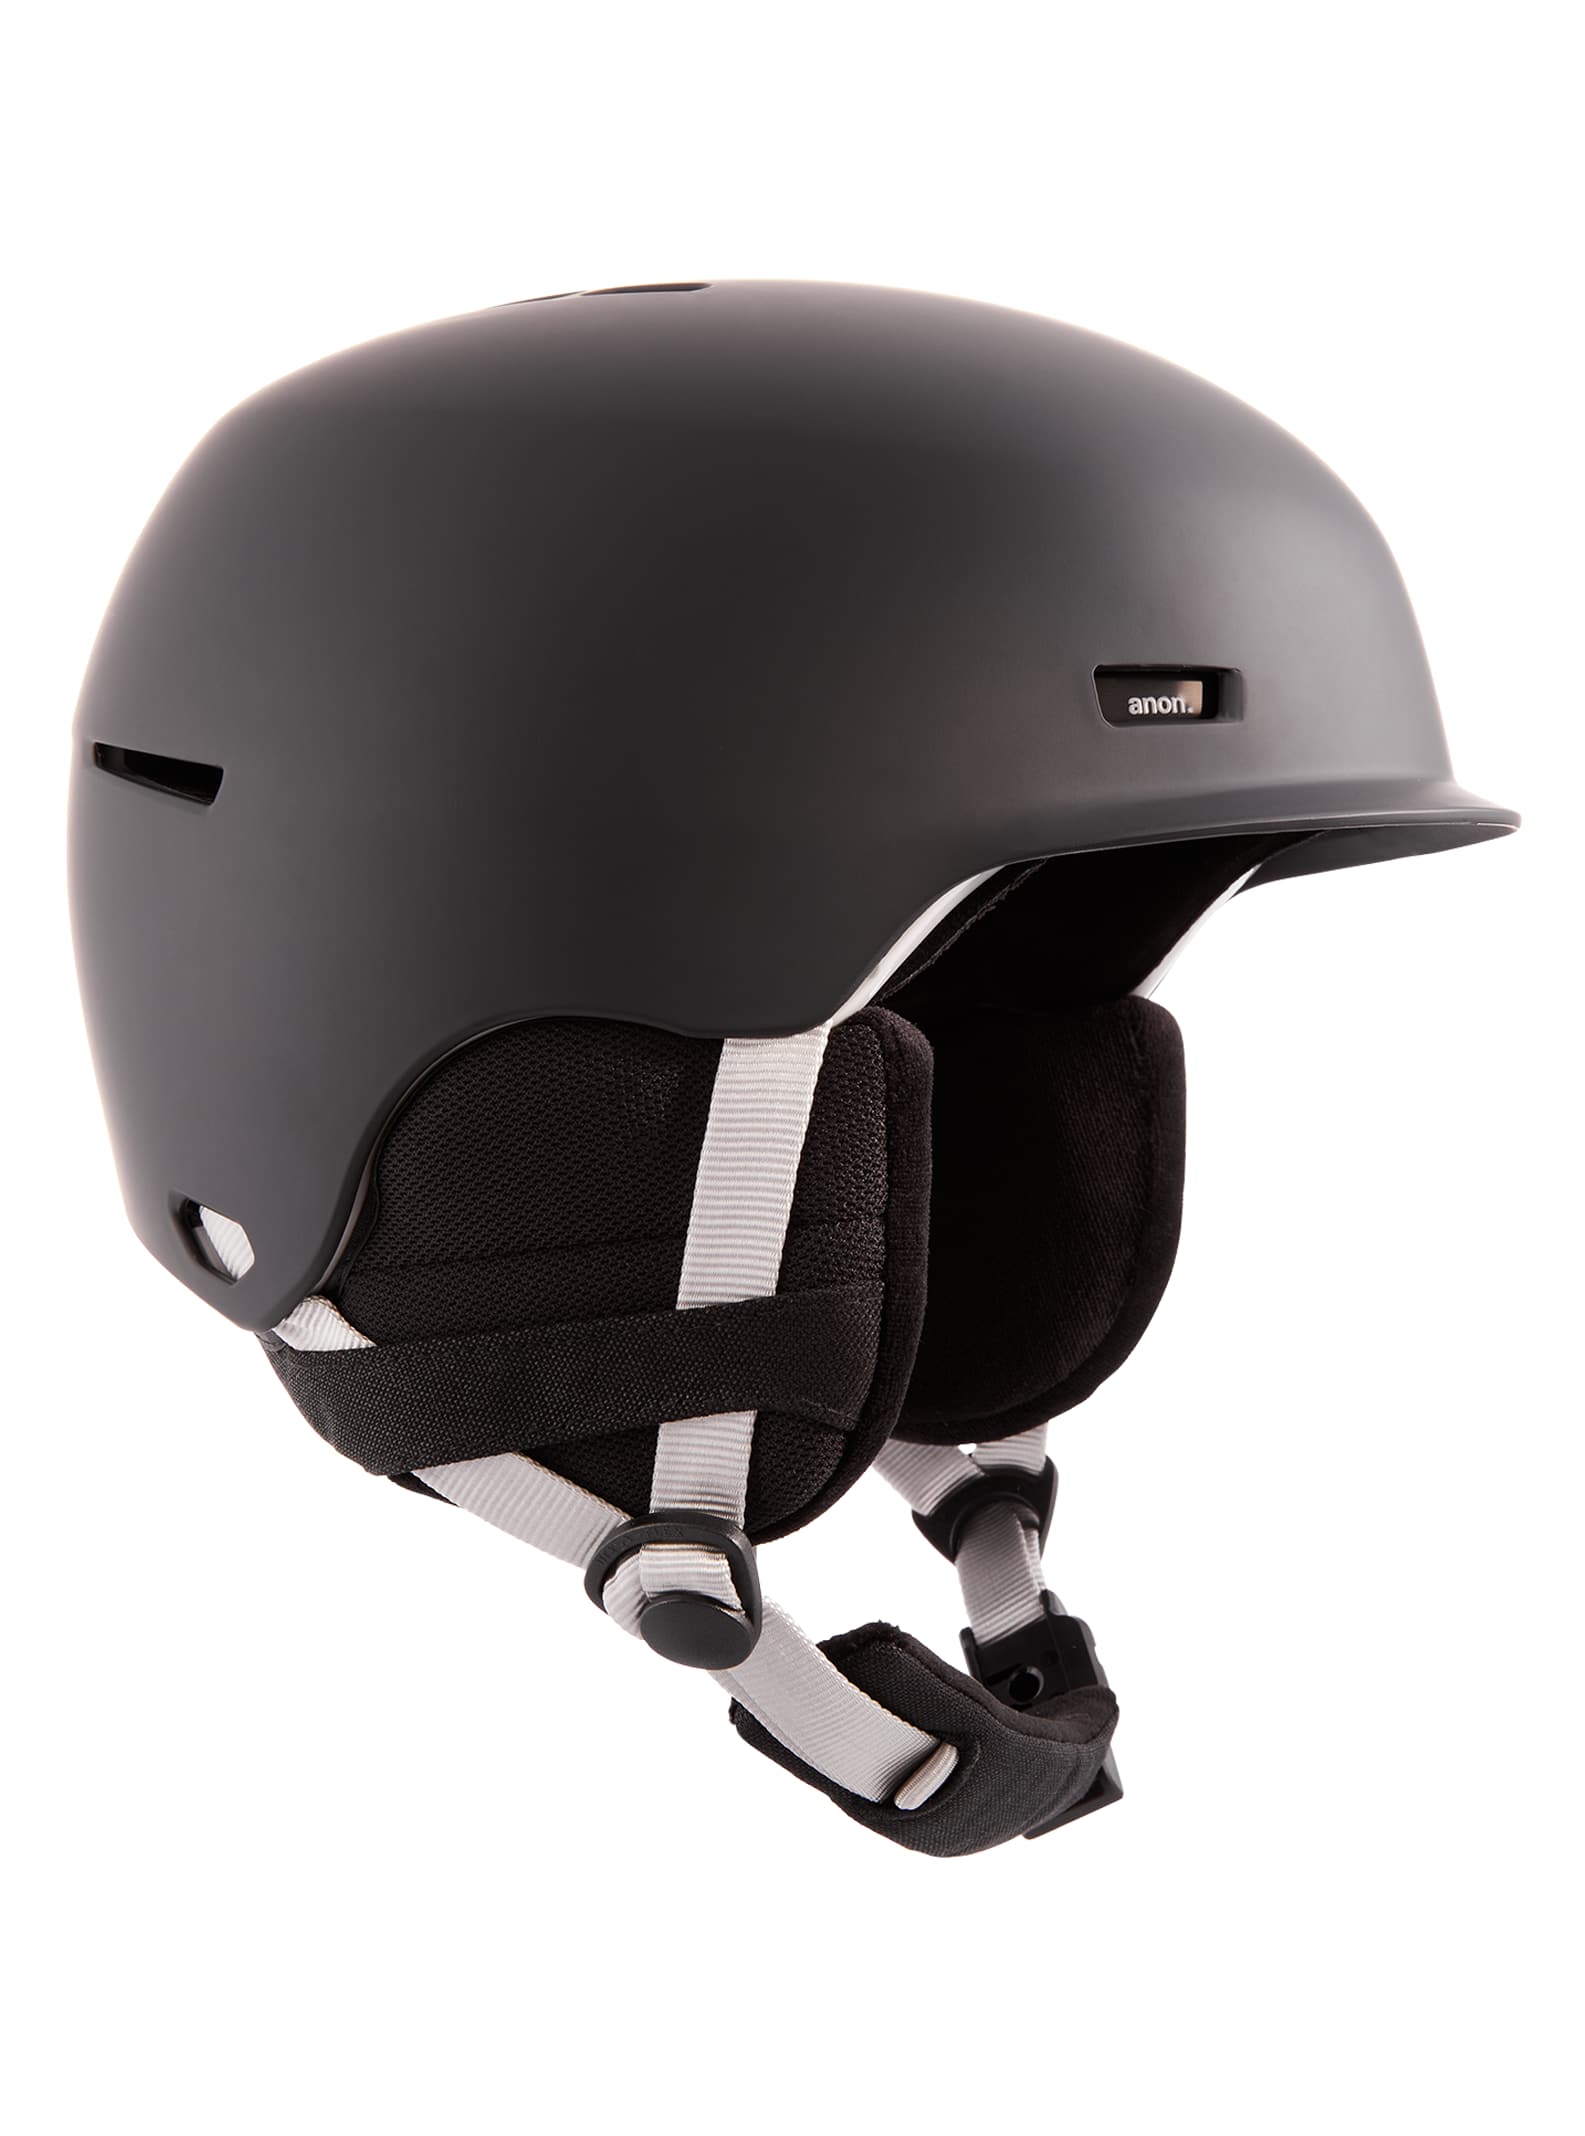 Anon Raven MIPS® Helmet | Burton.com Winter 2022 US